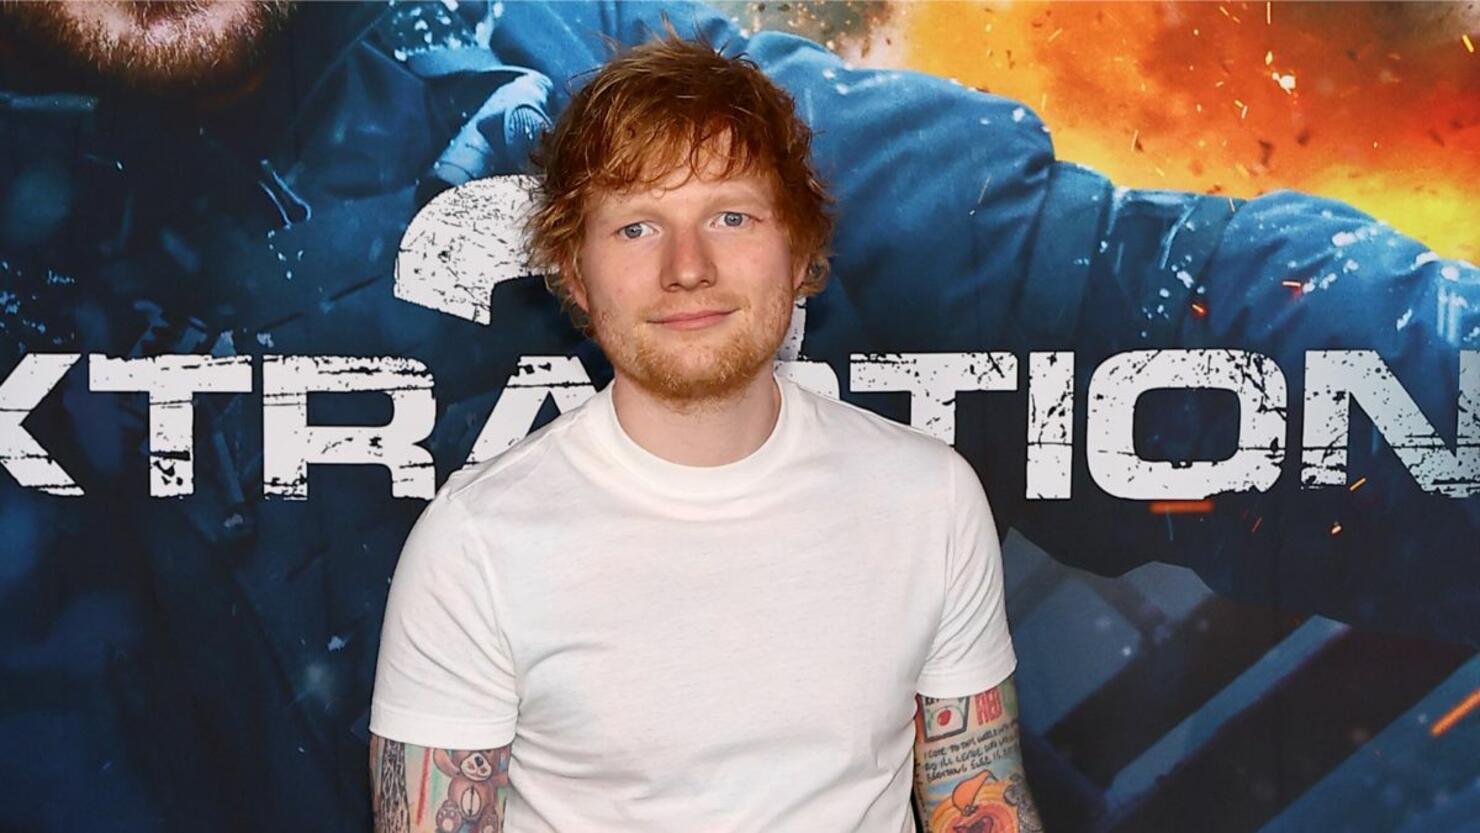 Ed Sheeran announces live album recorded in fans' living rooms